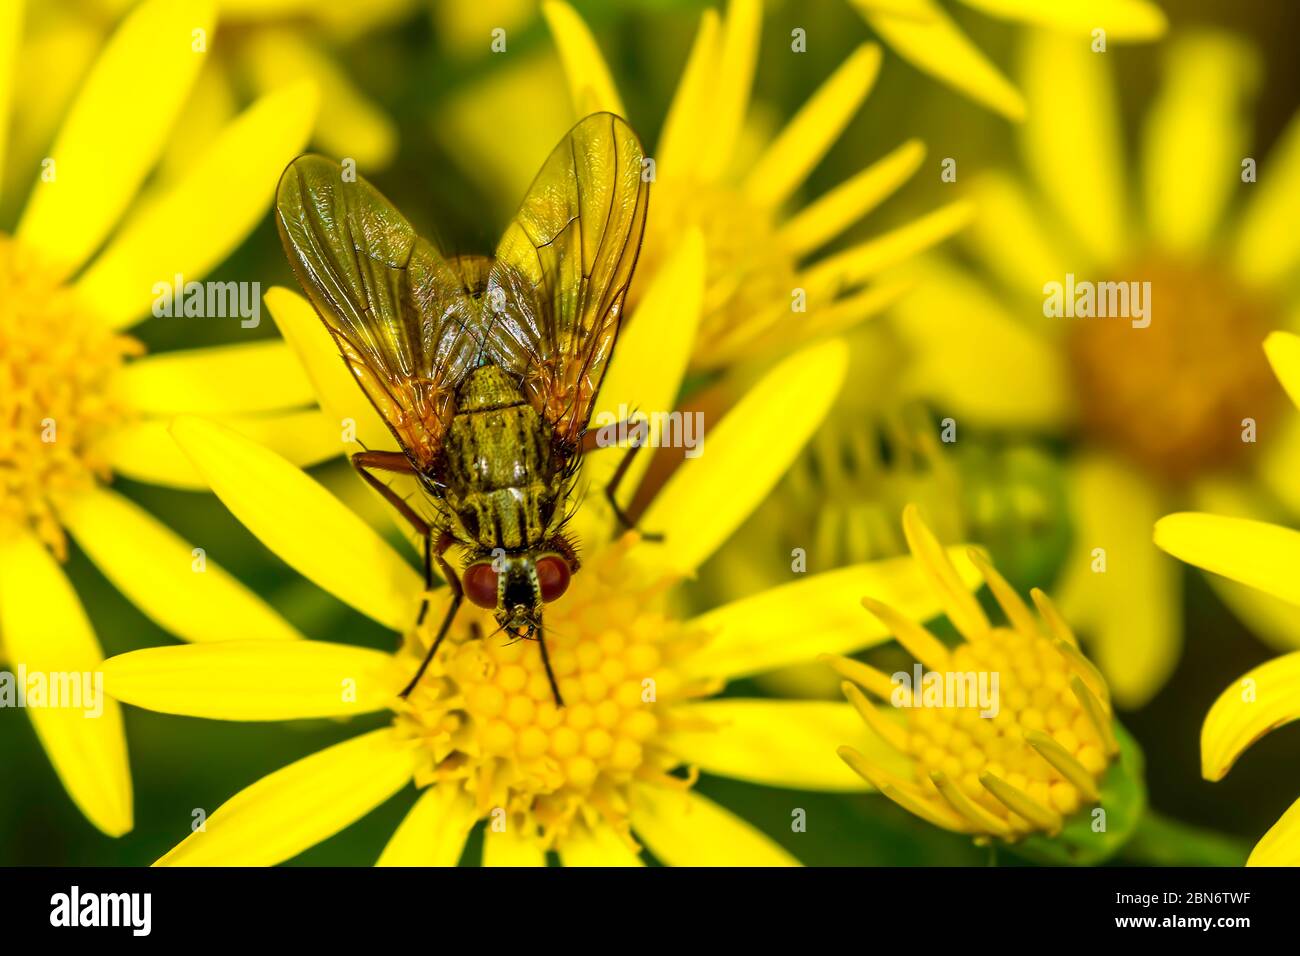 Alamy Uk British Fliy Diptera resting on some bright golden flower heads. Stock Photo